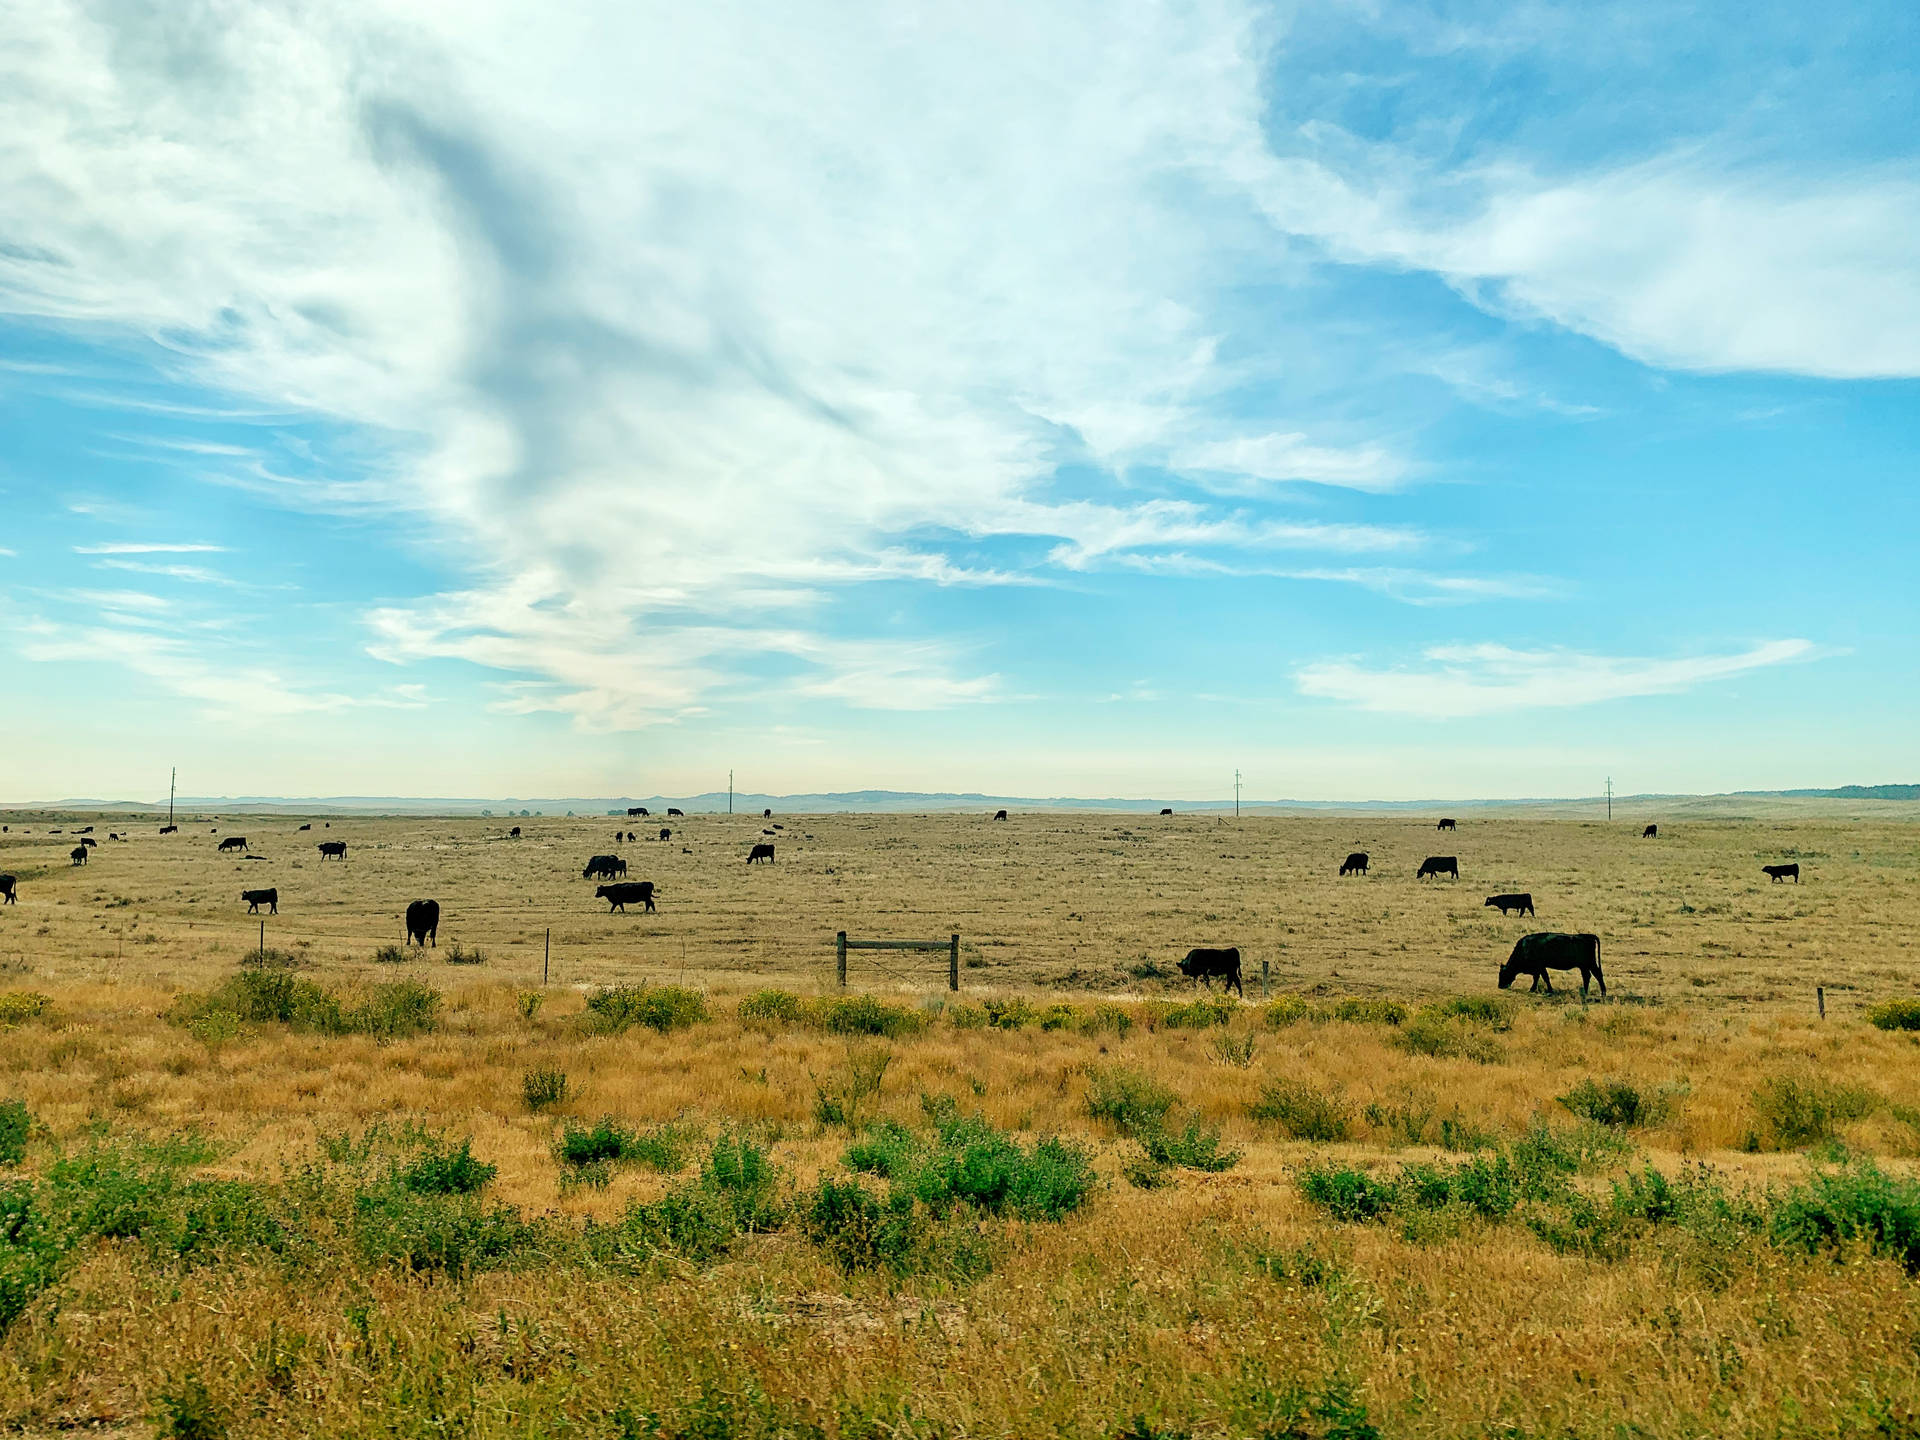 A Grassy Field Of Cute Cows